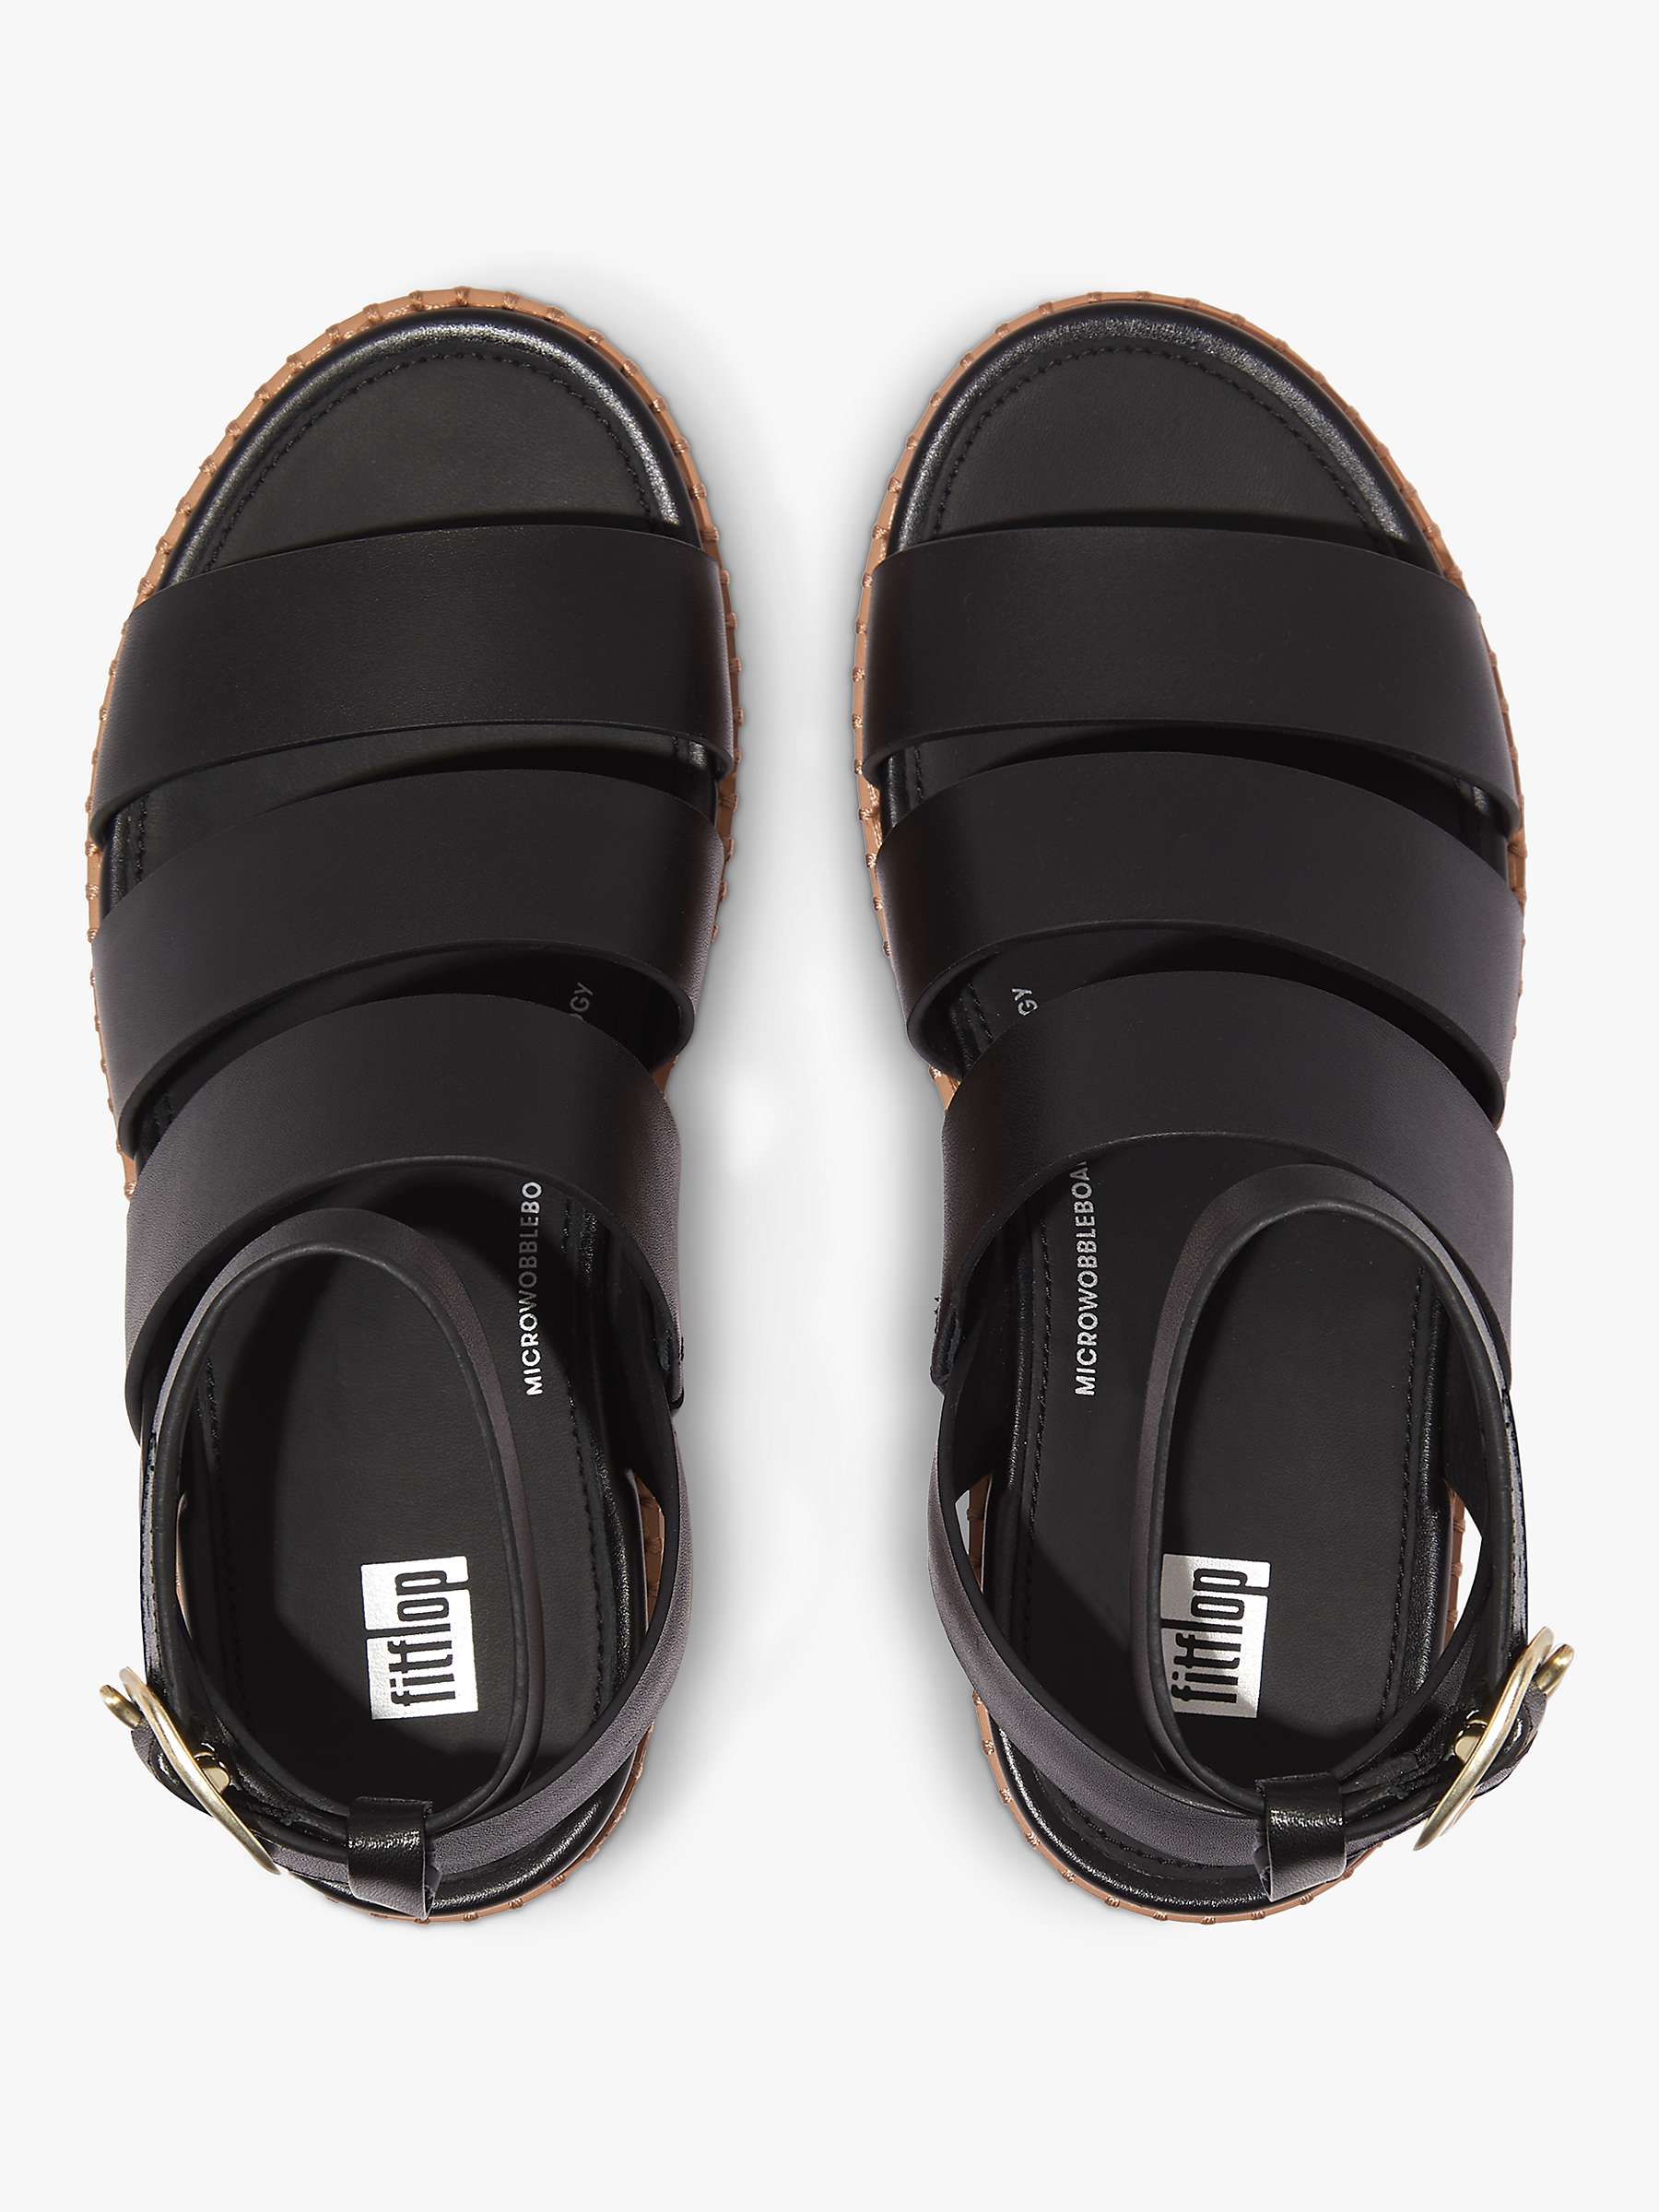 Buy FitFlop Eloise Cork Wedge Leather Sandals, Black Online at johnlewis.com